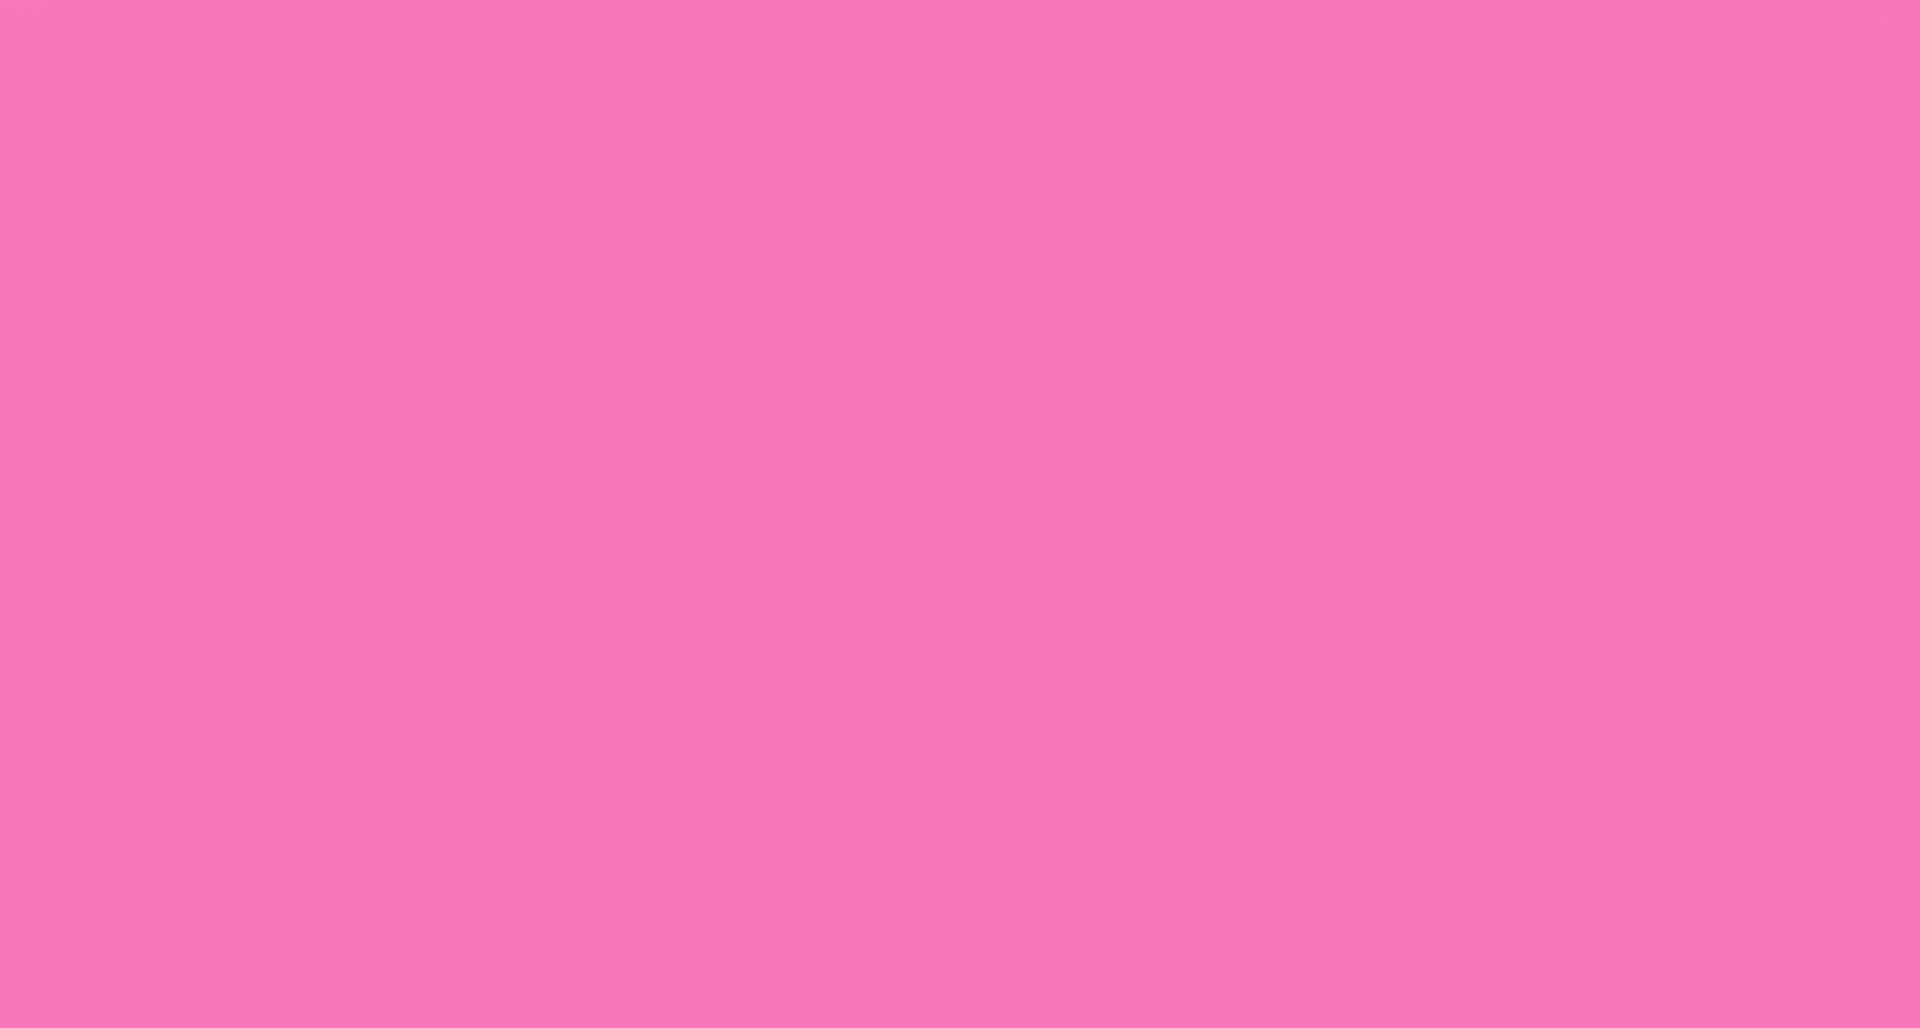 Bright Pink background